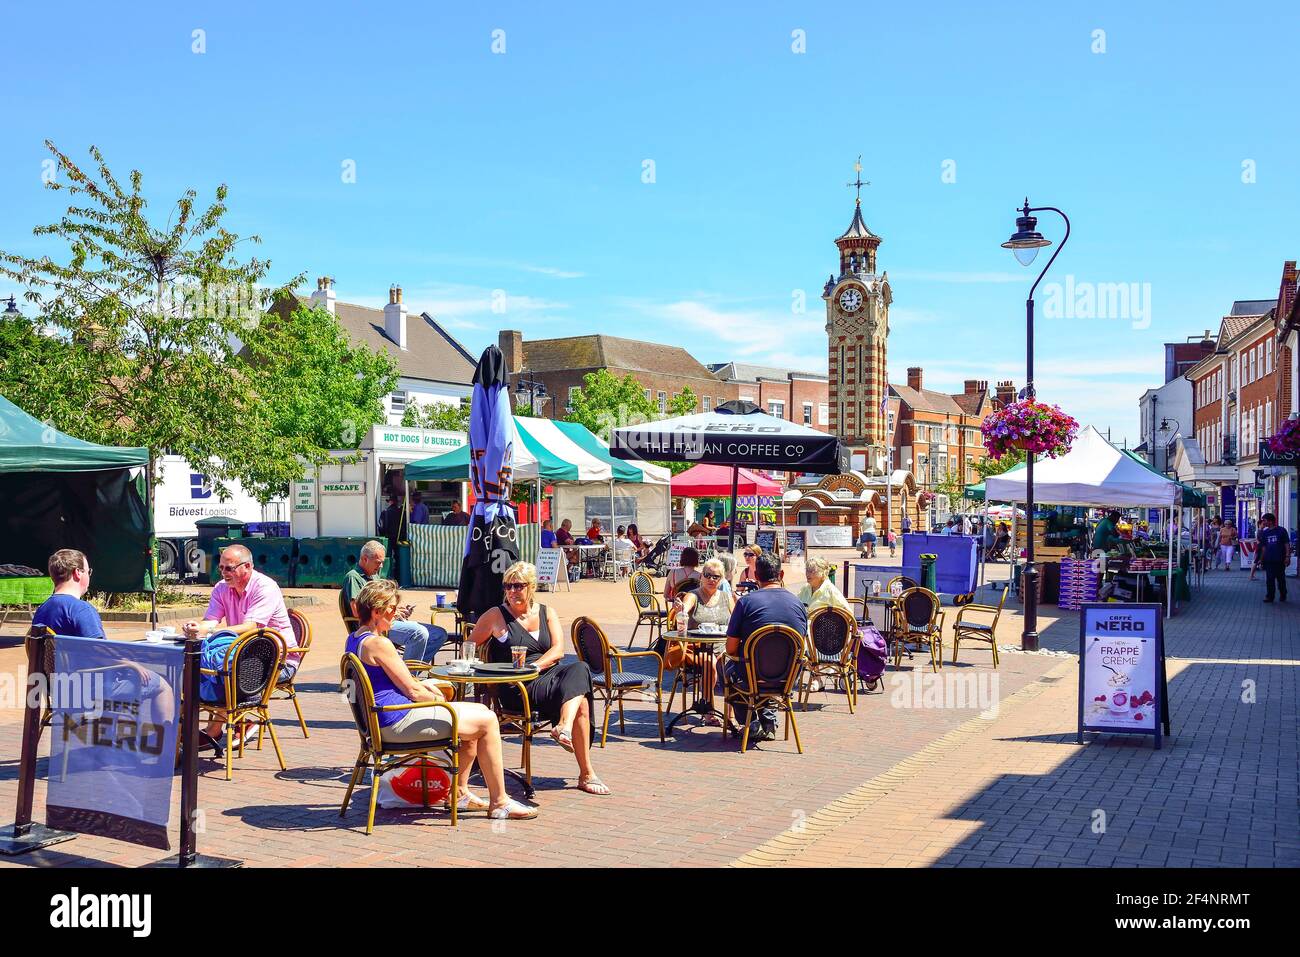 Outdoor cafe and market stalls, High Street, Epsom, Surrey, England, United Kingdom Stock Photo